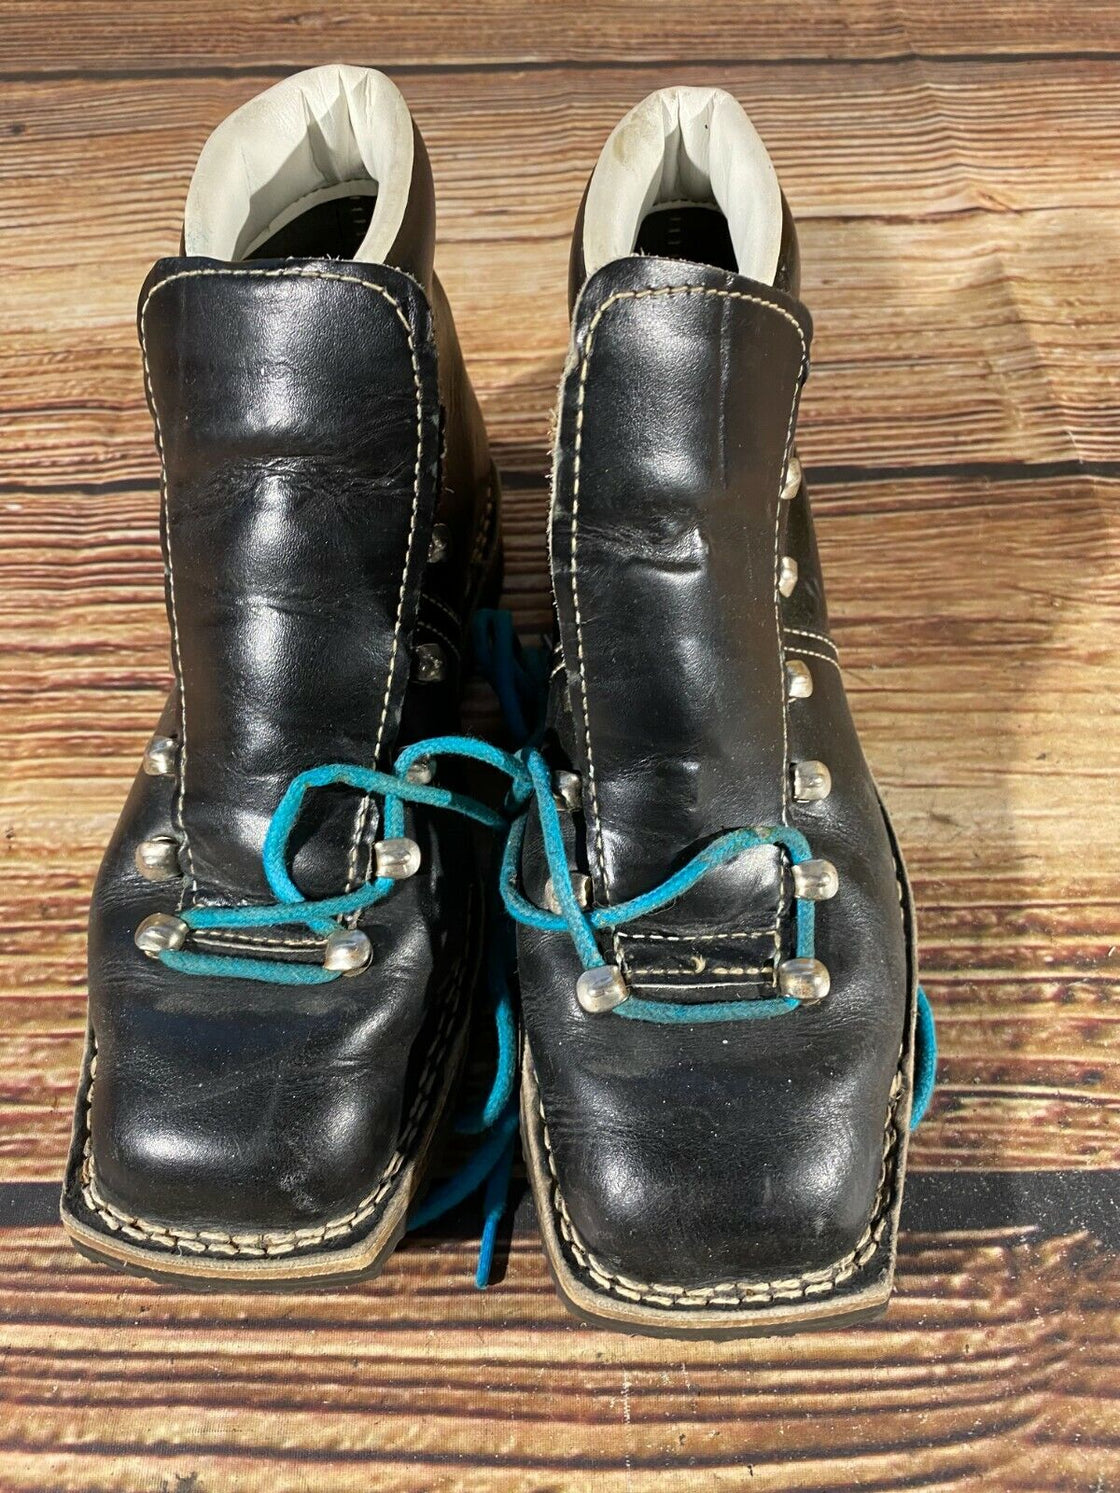 MSB MORA Vintage Cross Country Ski Boots Kandahar, Old Cable Bindings EU39 US6.5